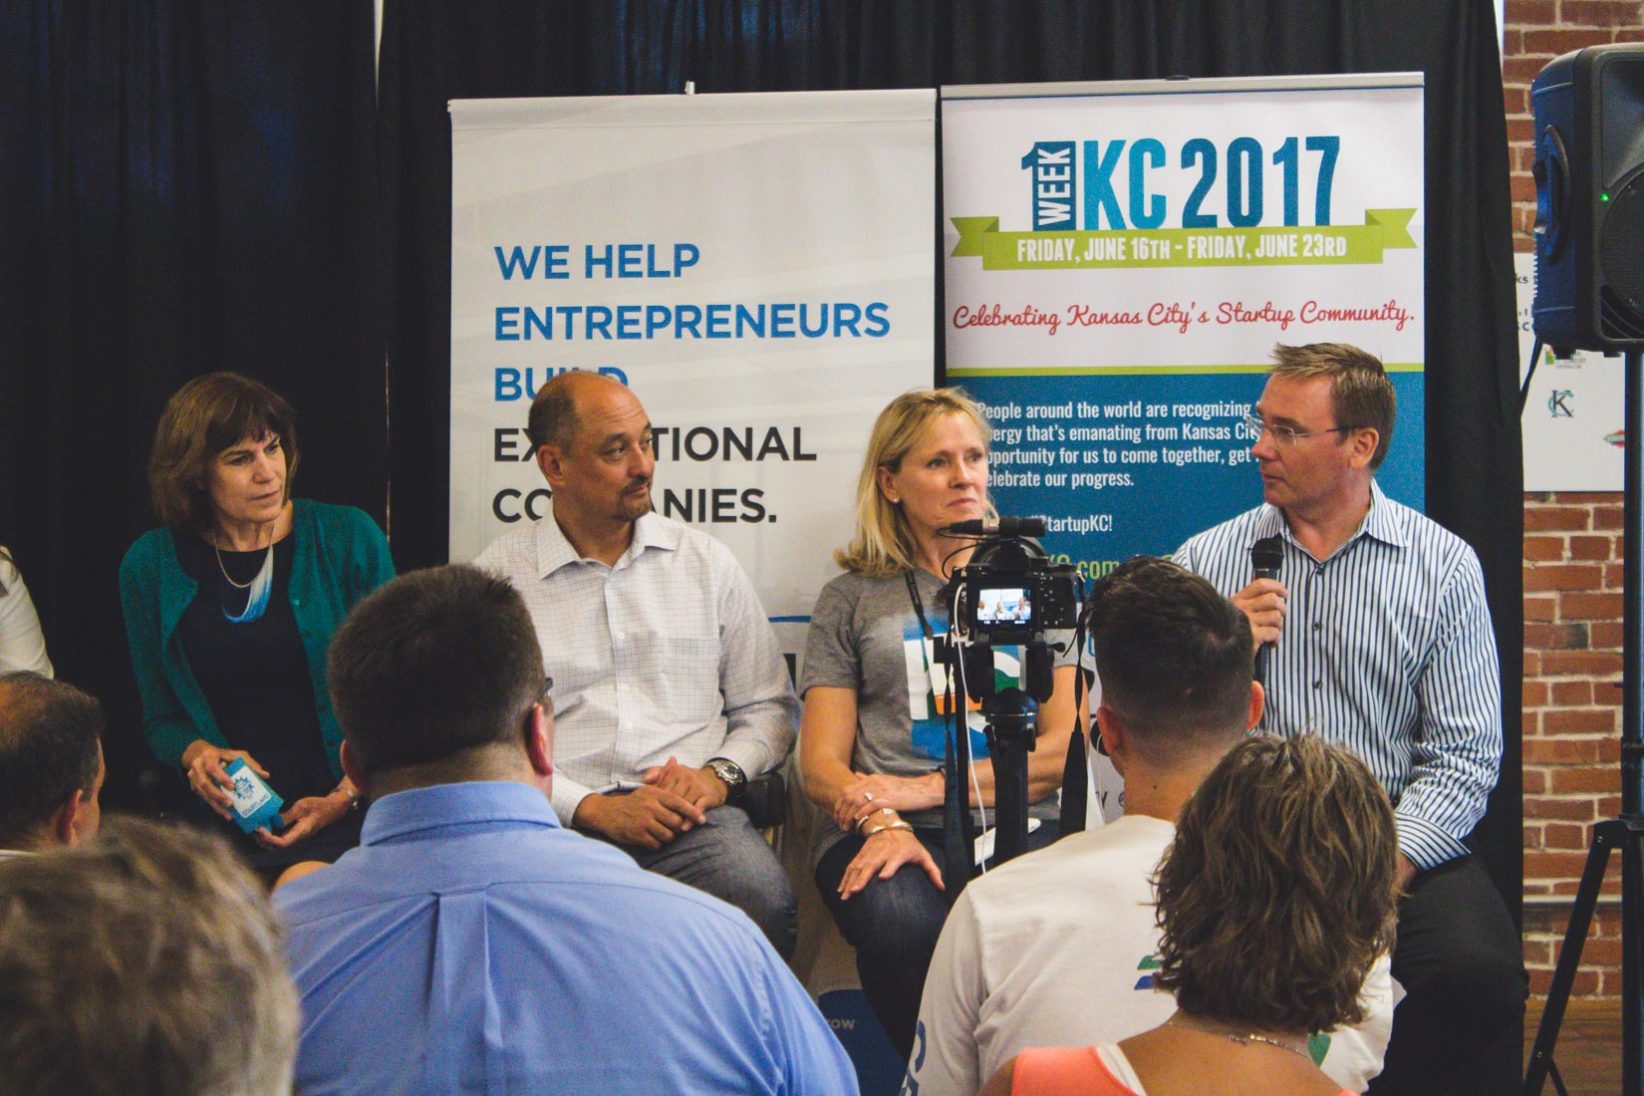 Listen: Leaders analyze KC’s entrepreneurial milestones, assess challenges